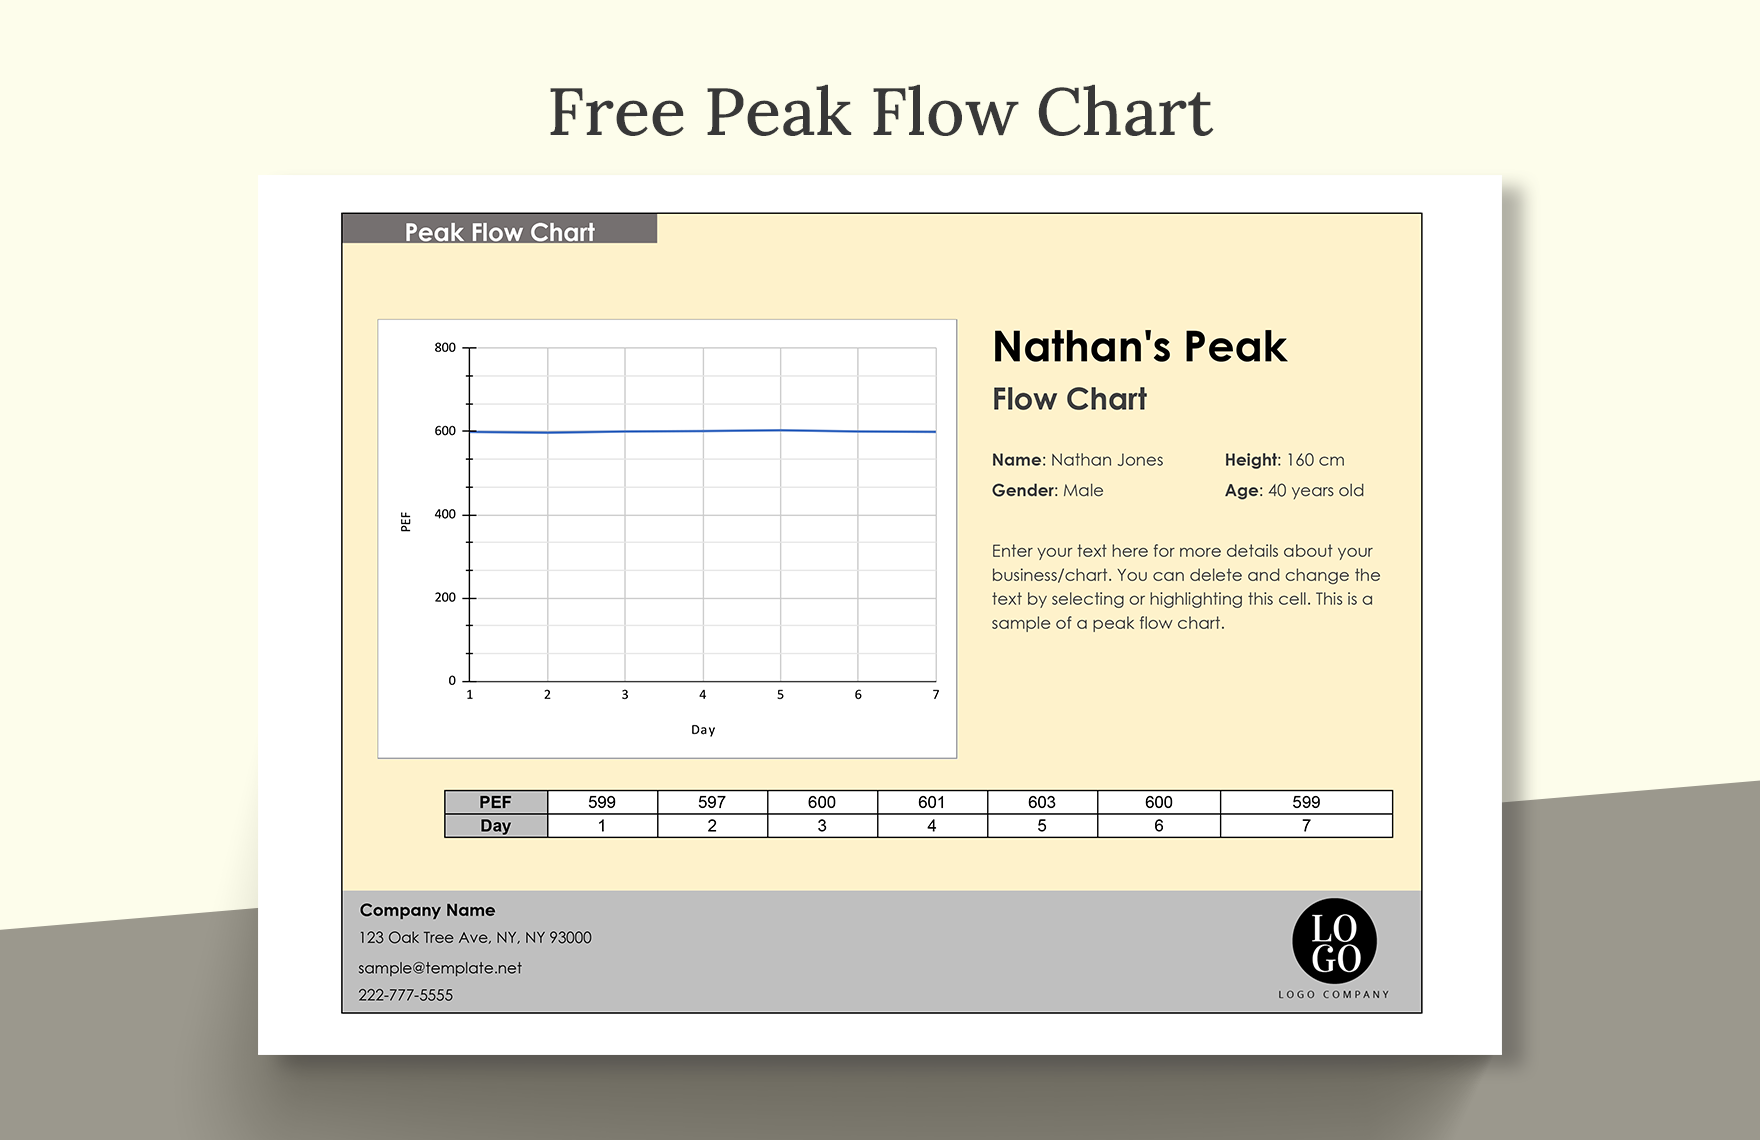 Free Peak Flow Chart